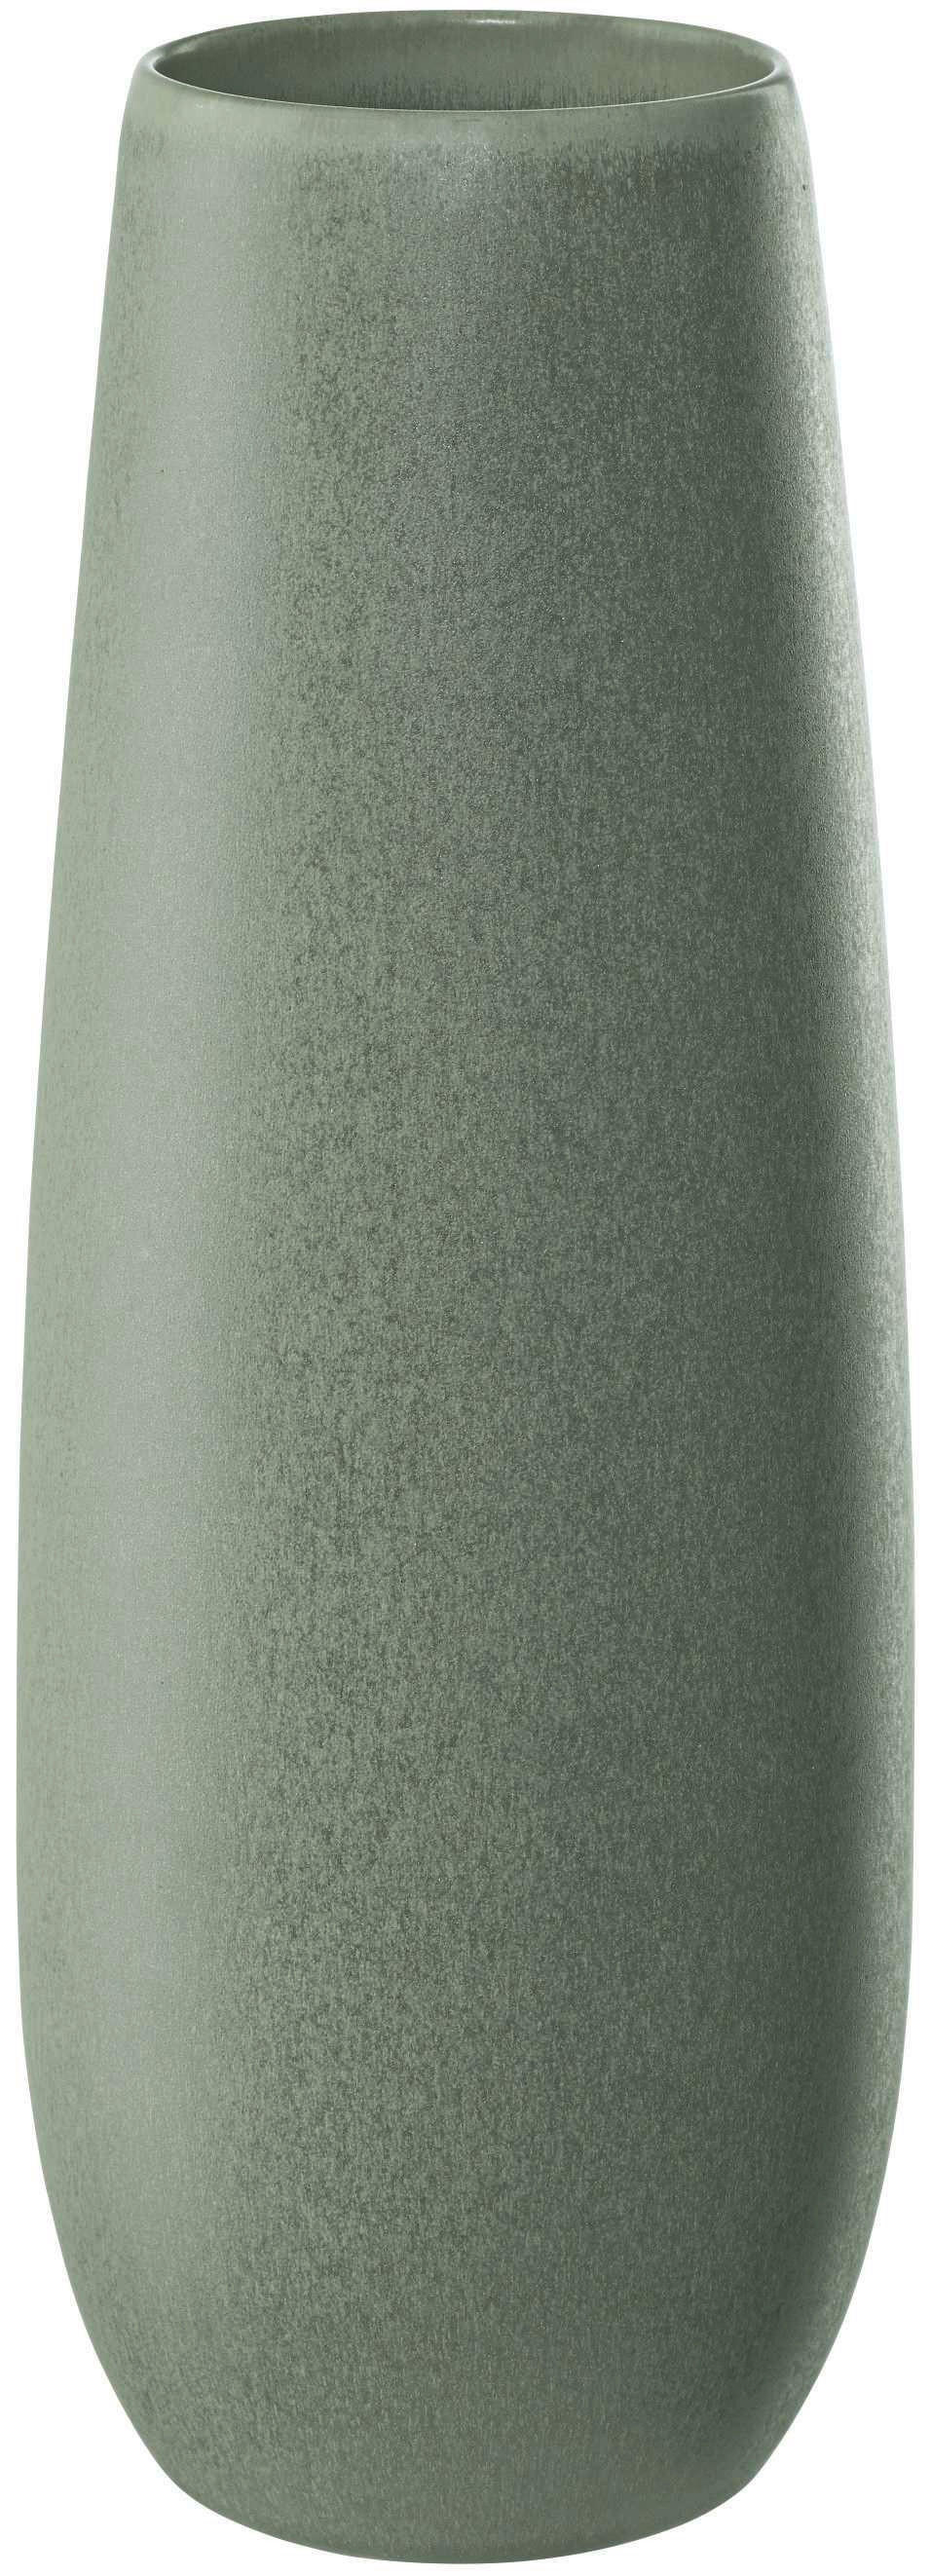 VASE  - Grün, Basics, Keramik (8/32cm) - ASA